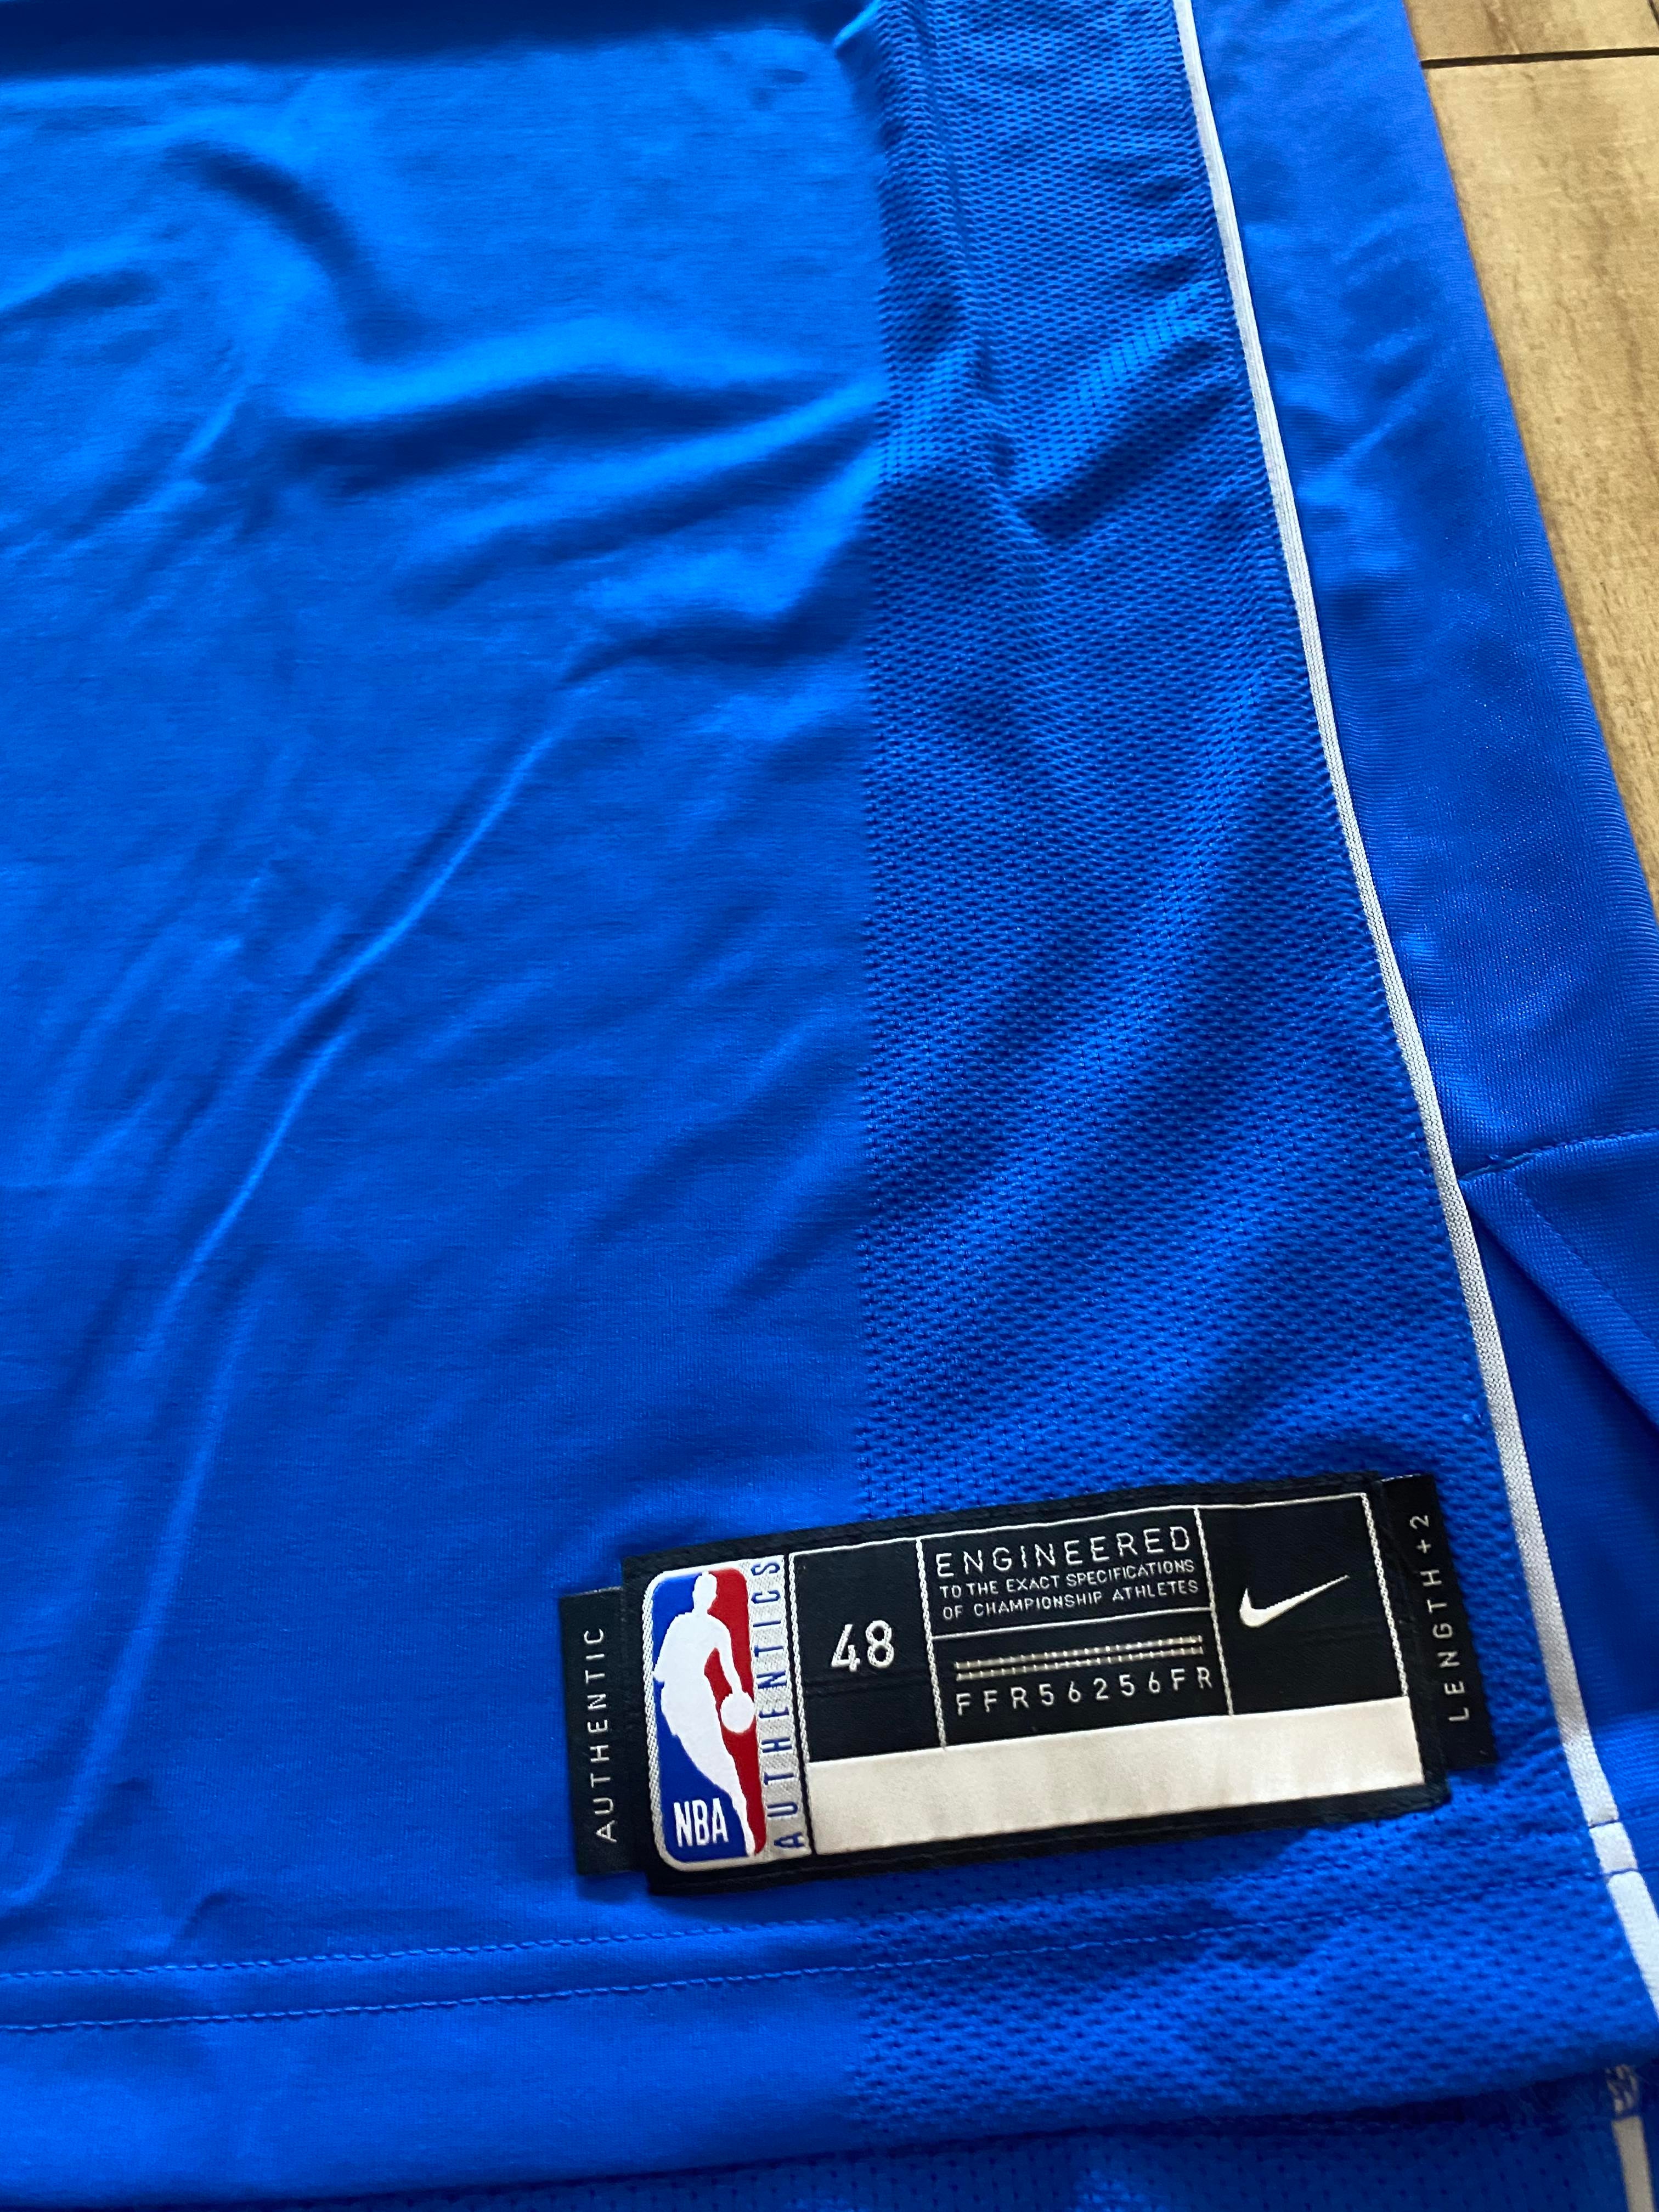 Dallas Mavericks Nike Vapor Knit NBA Authentic Replica Game Jersey, Size 48  - Large